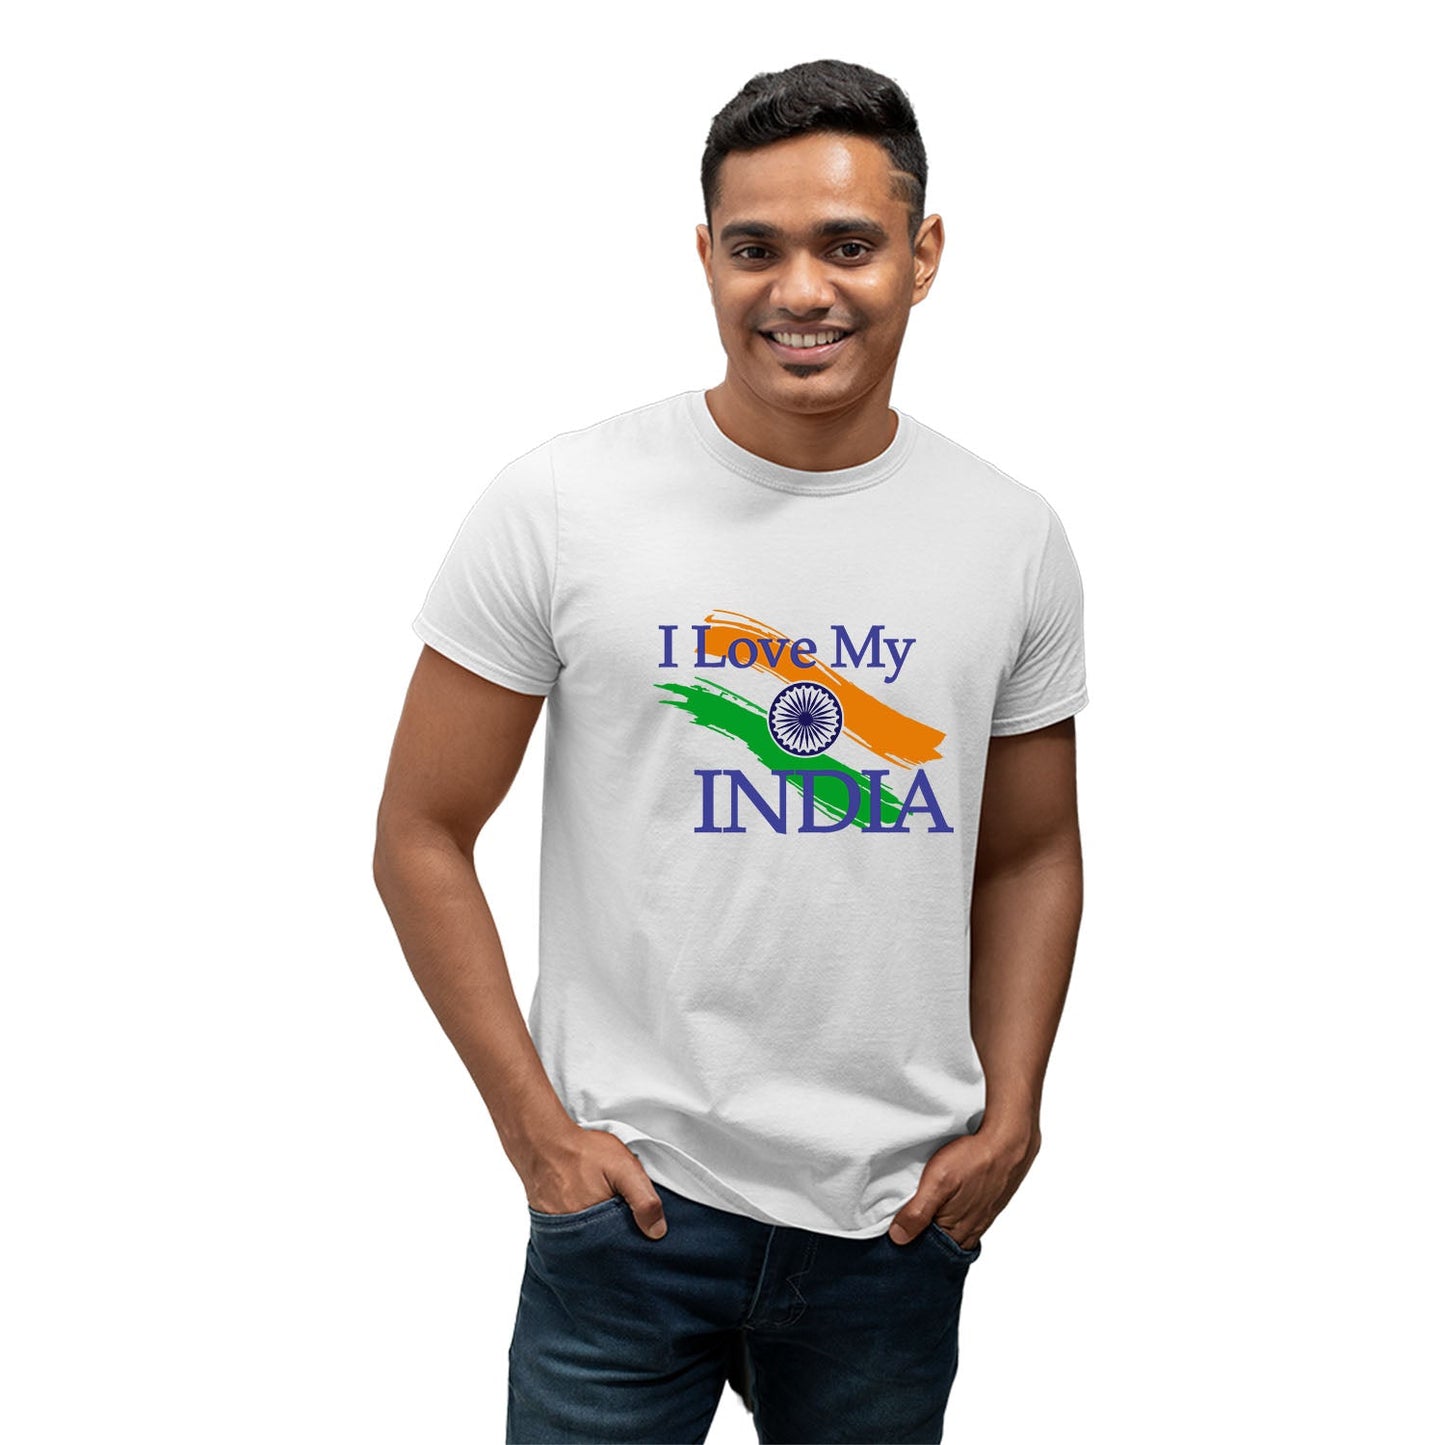 I Love My India Tshirt Men